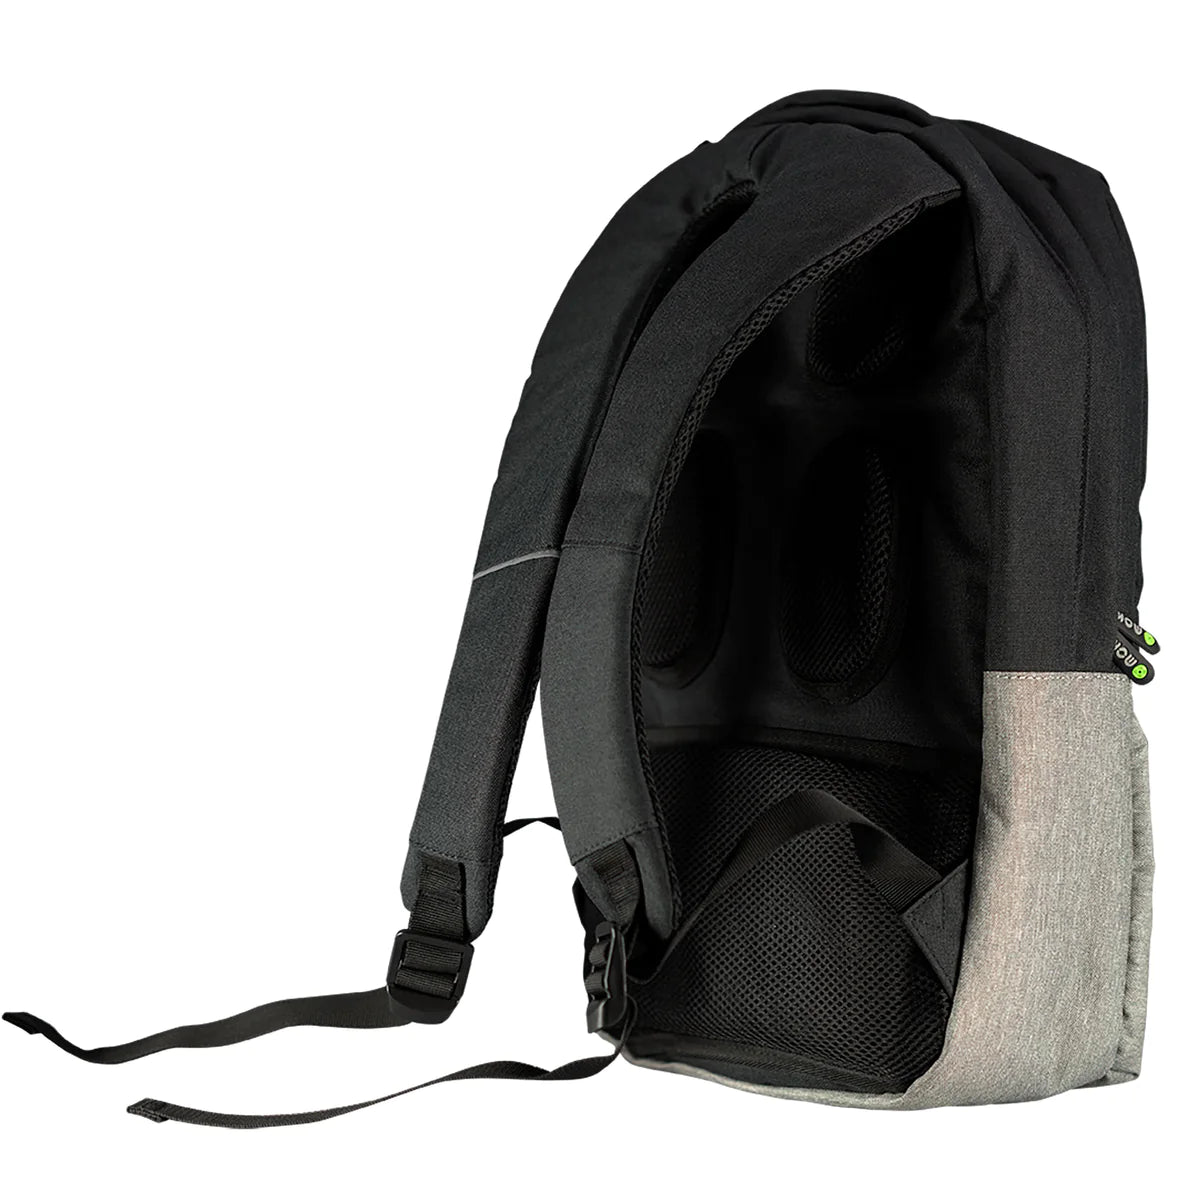 Moki Odyssey 15.6 inch Laptop Backpack